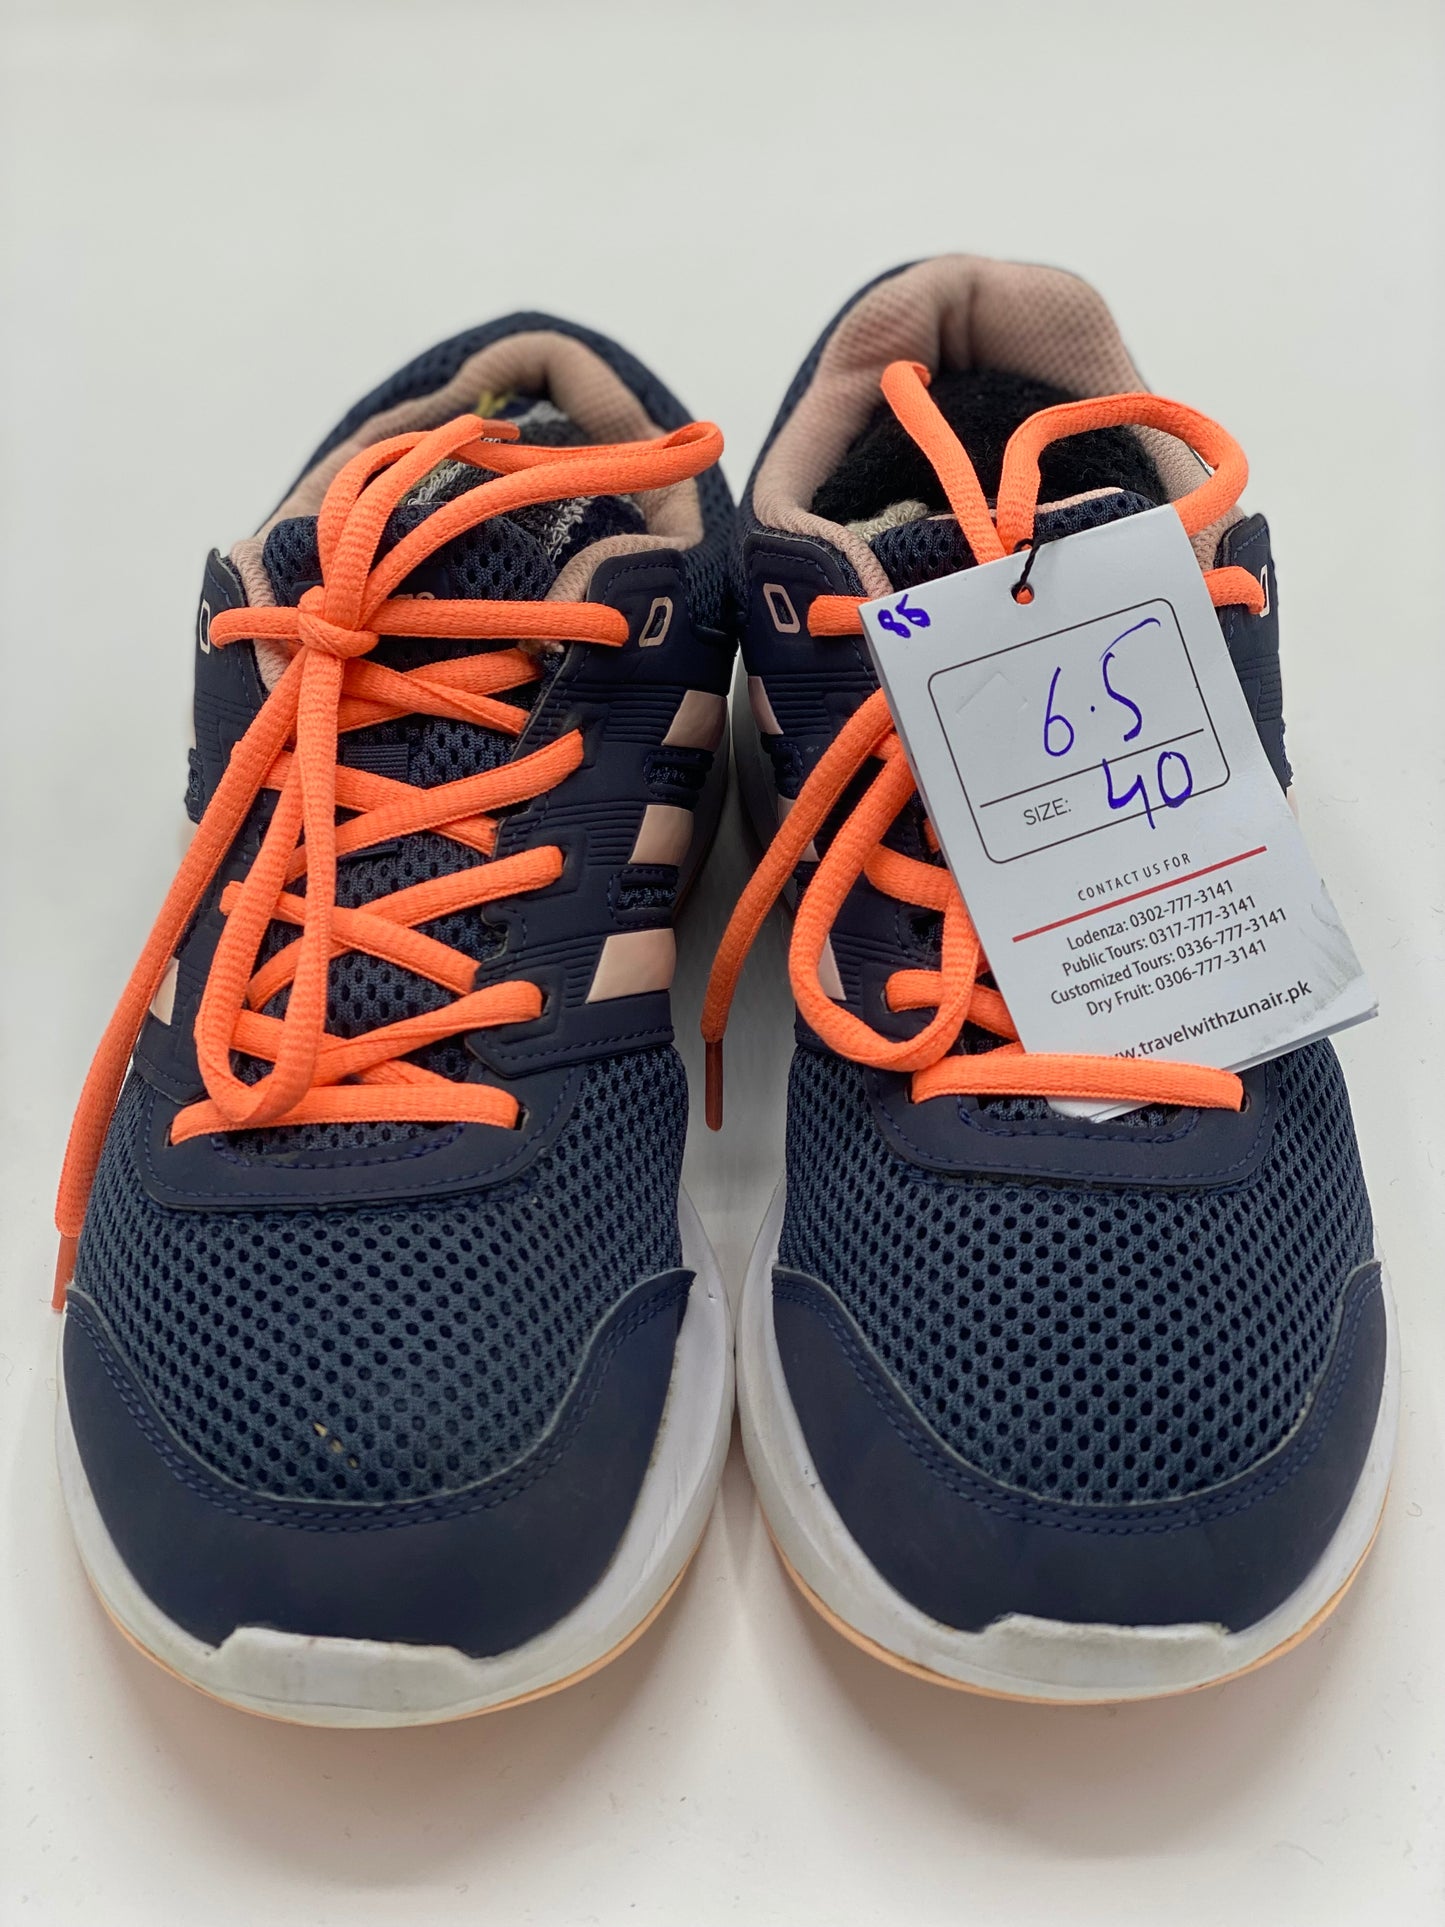 adidas men’s running shoes